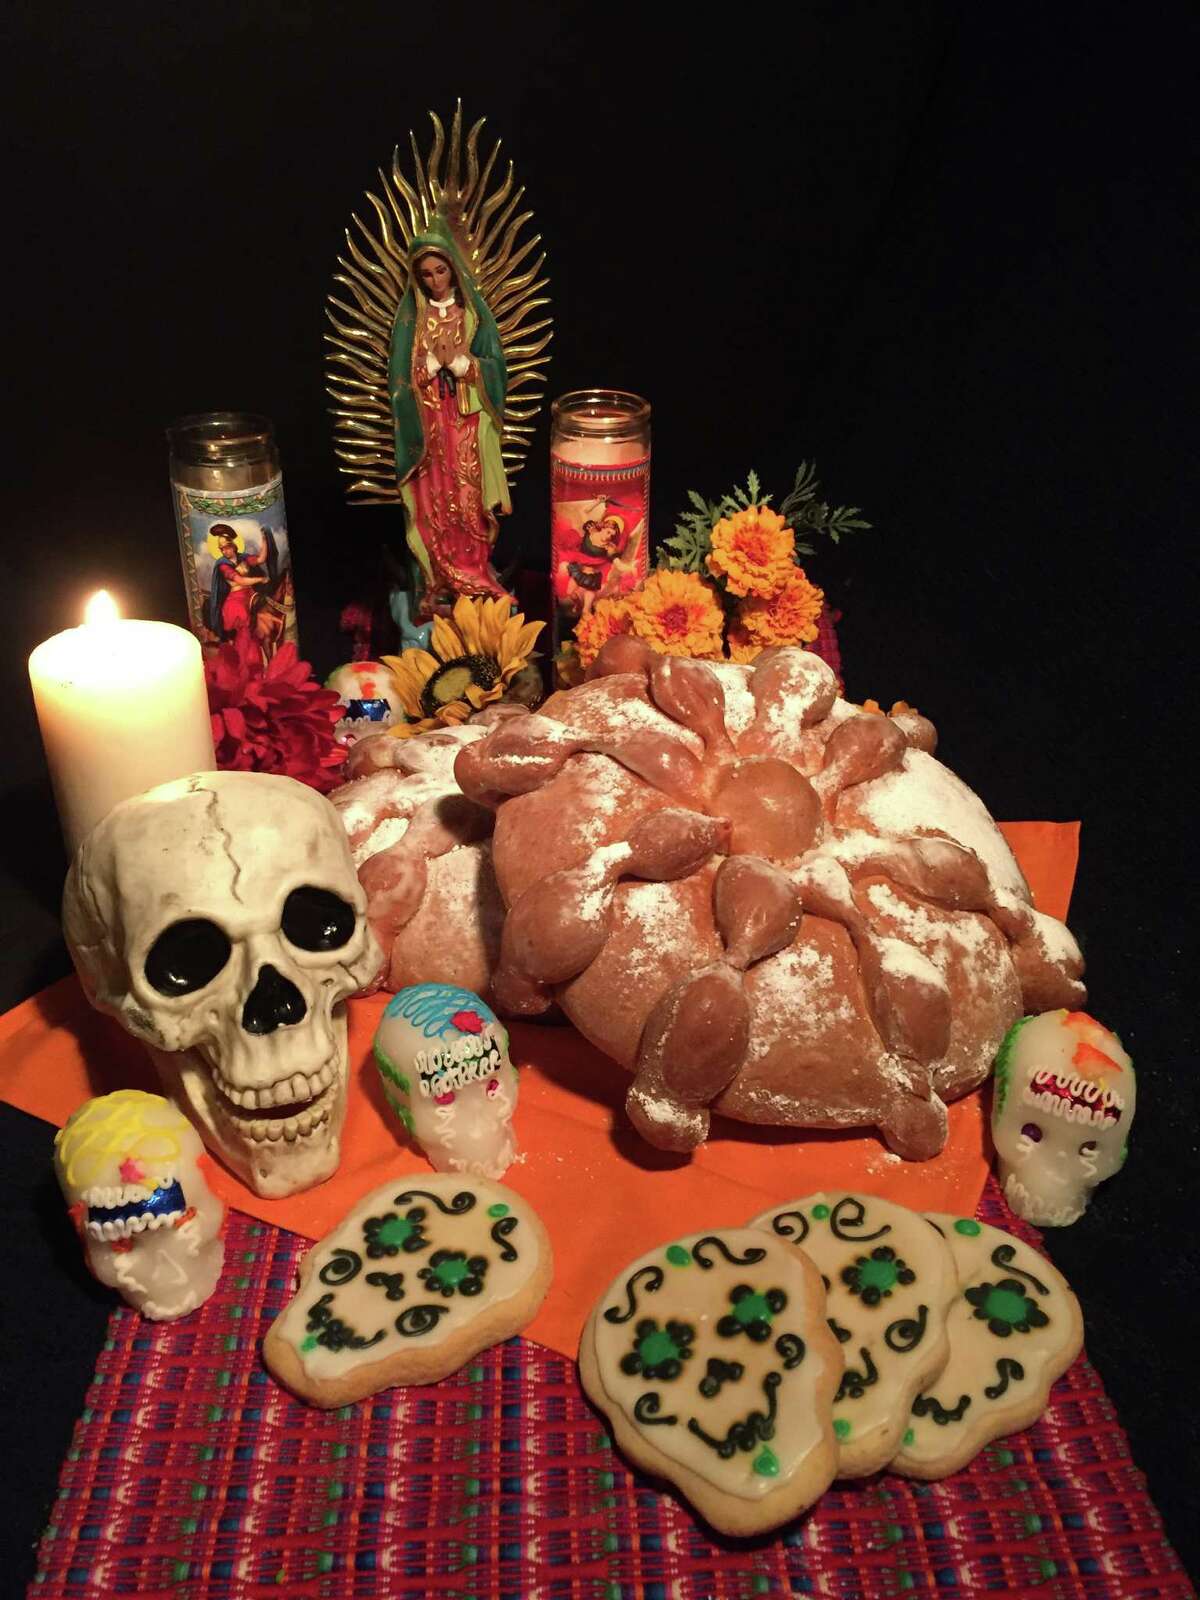 A display for Día de los Muertos: pan de muerto, candles, cookies, sugar skulls and Our Lady of Guadalupe